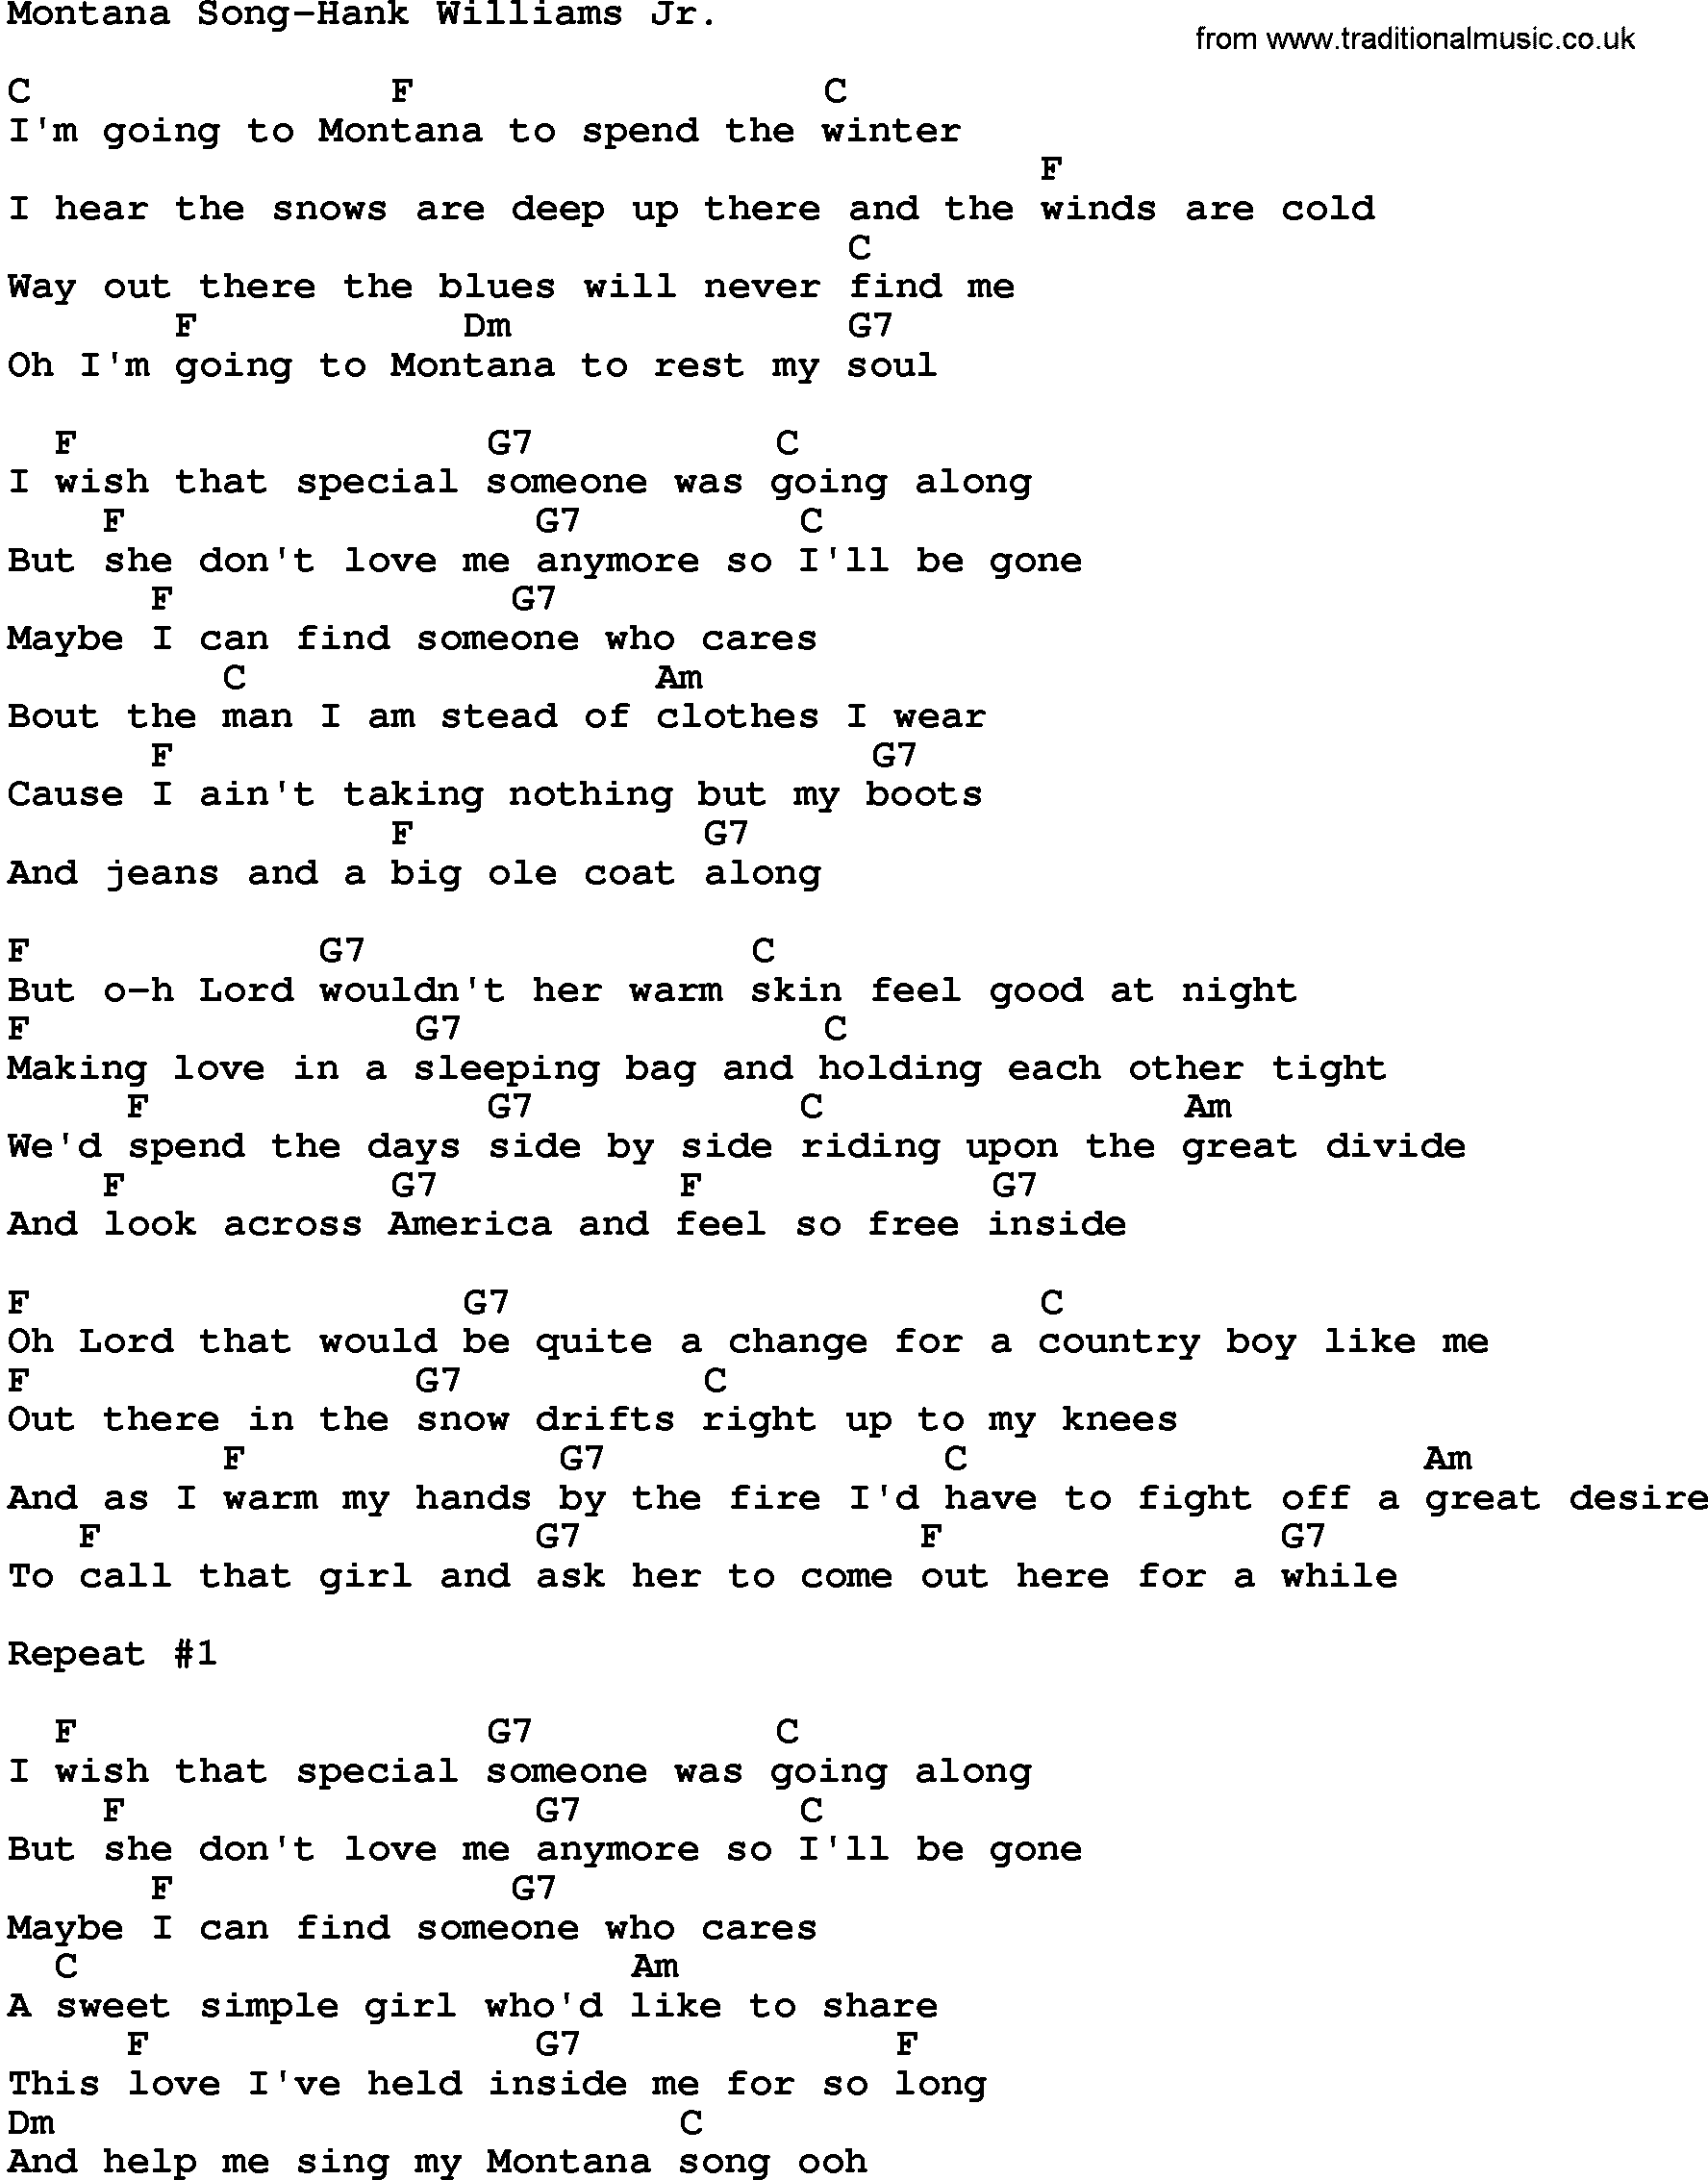 Country music song: Montana Song-Hank Williams Jr lyrics and chords